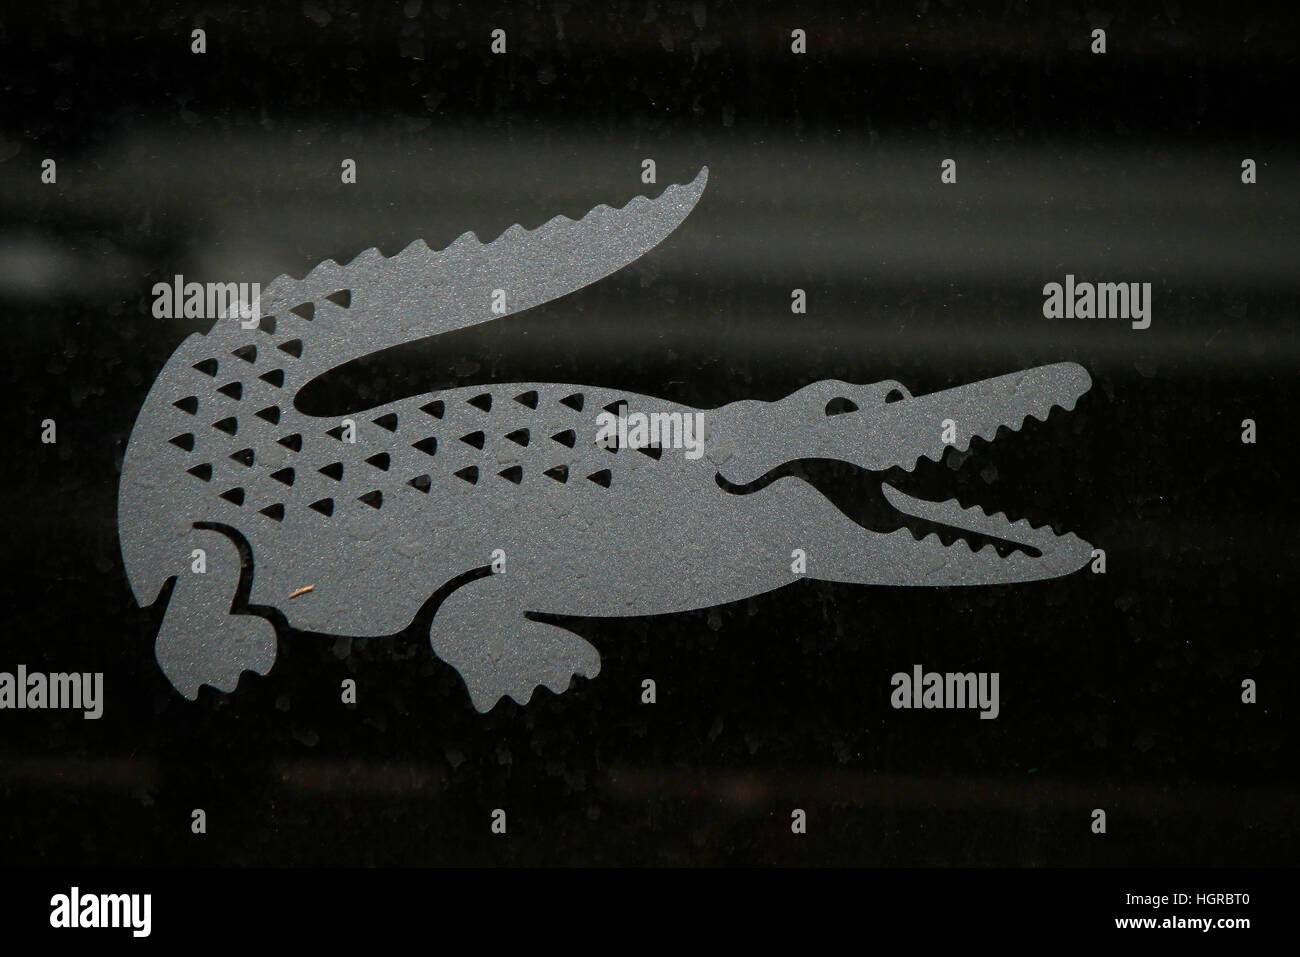 Lacoste logo stock photography images - Alamy